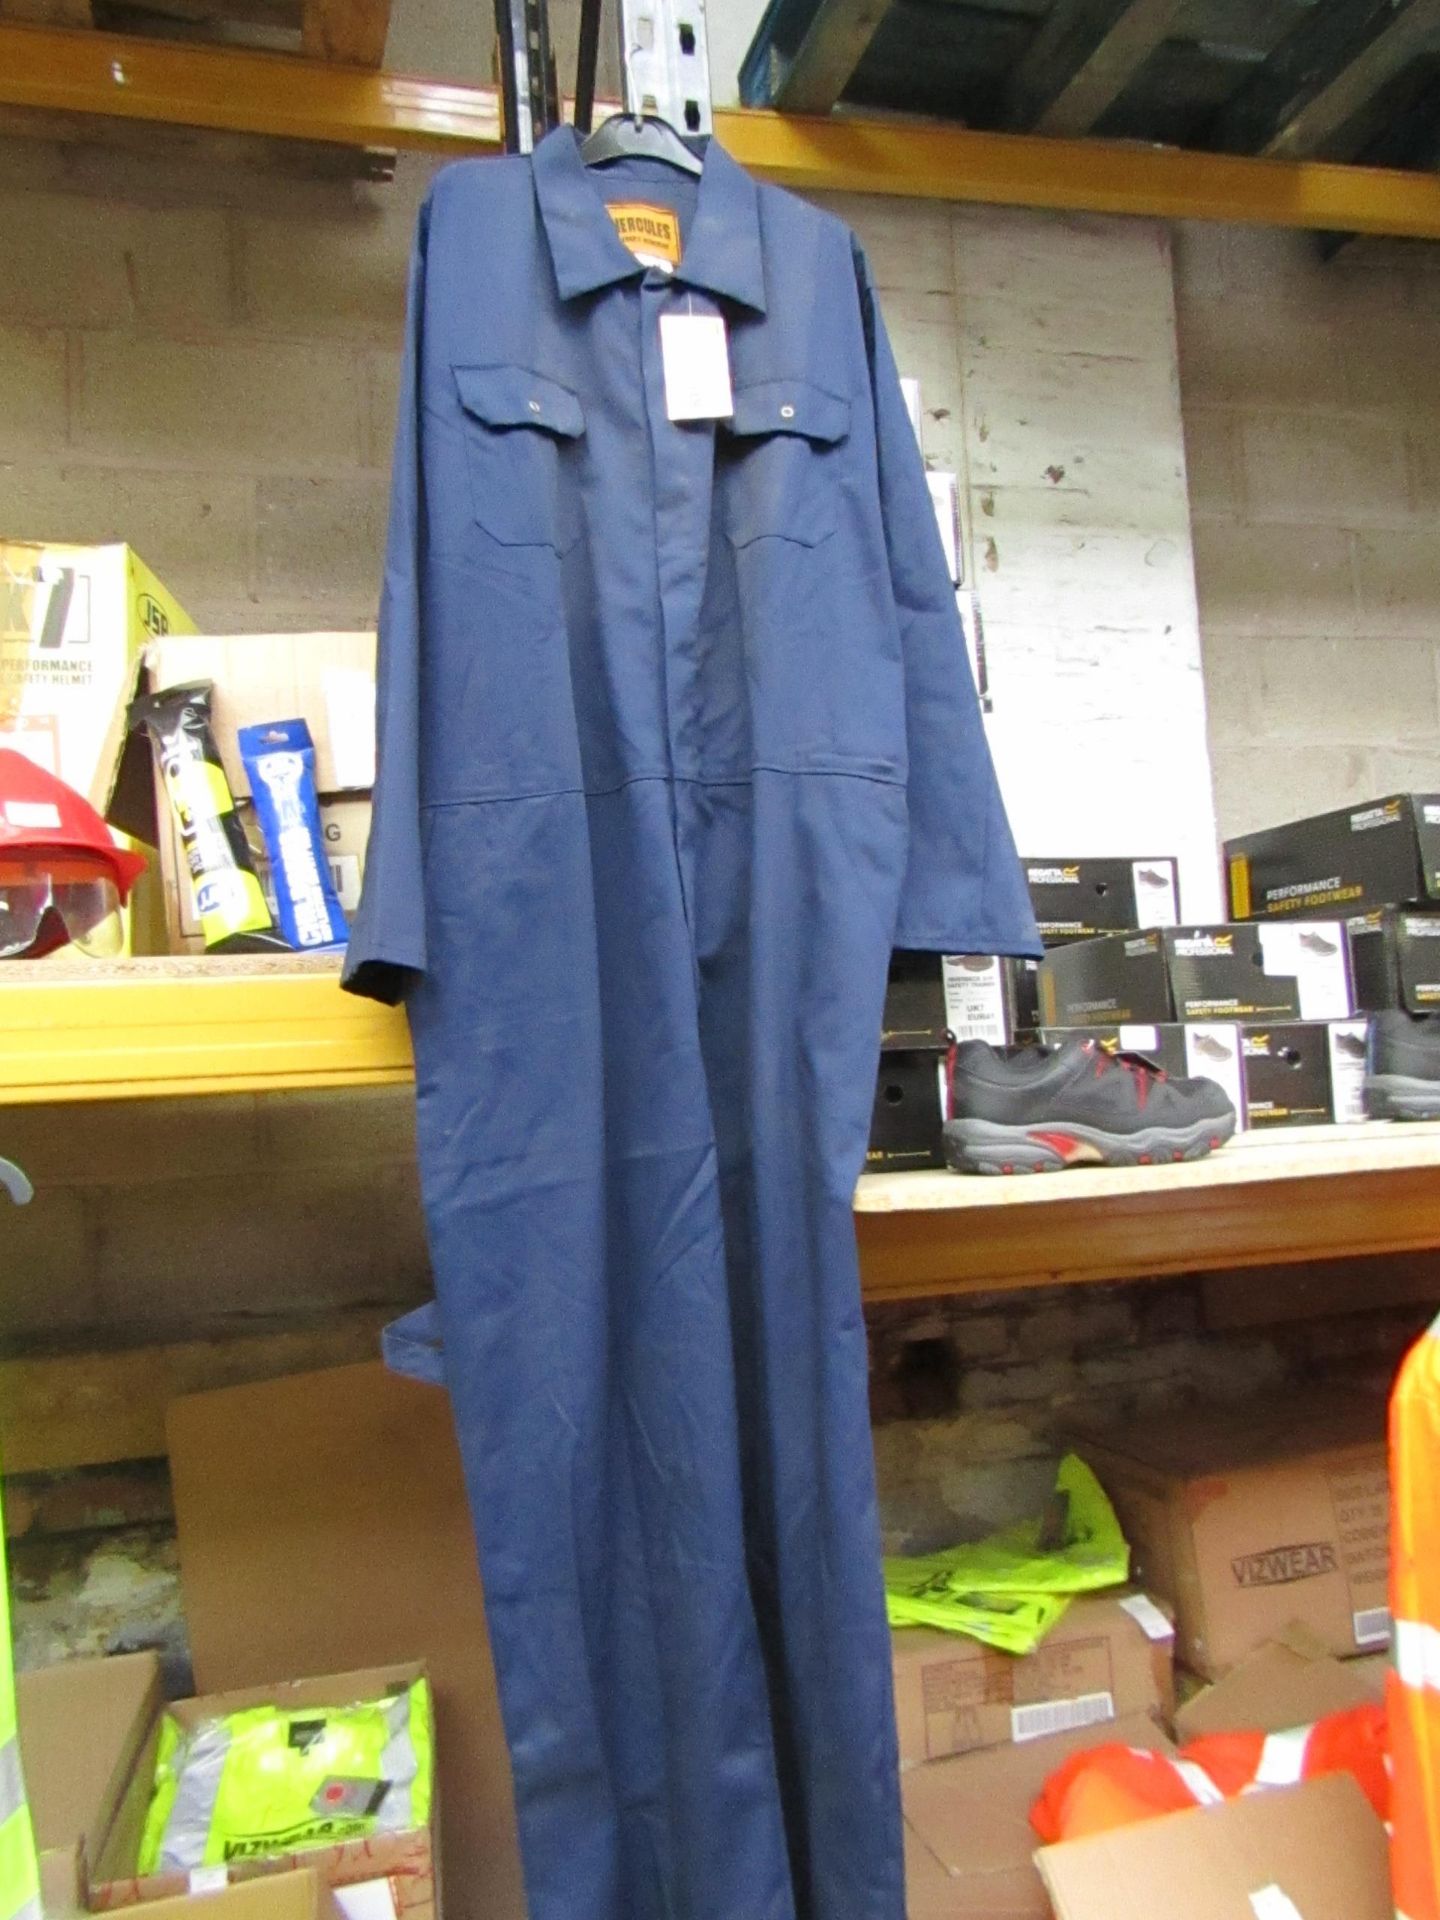 2 x Men's Hercules Workwear Boiler suit. Size 48. New in Packaging